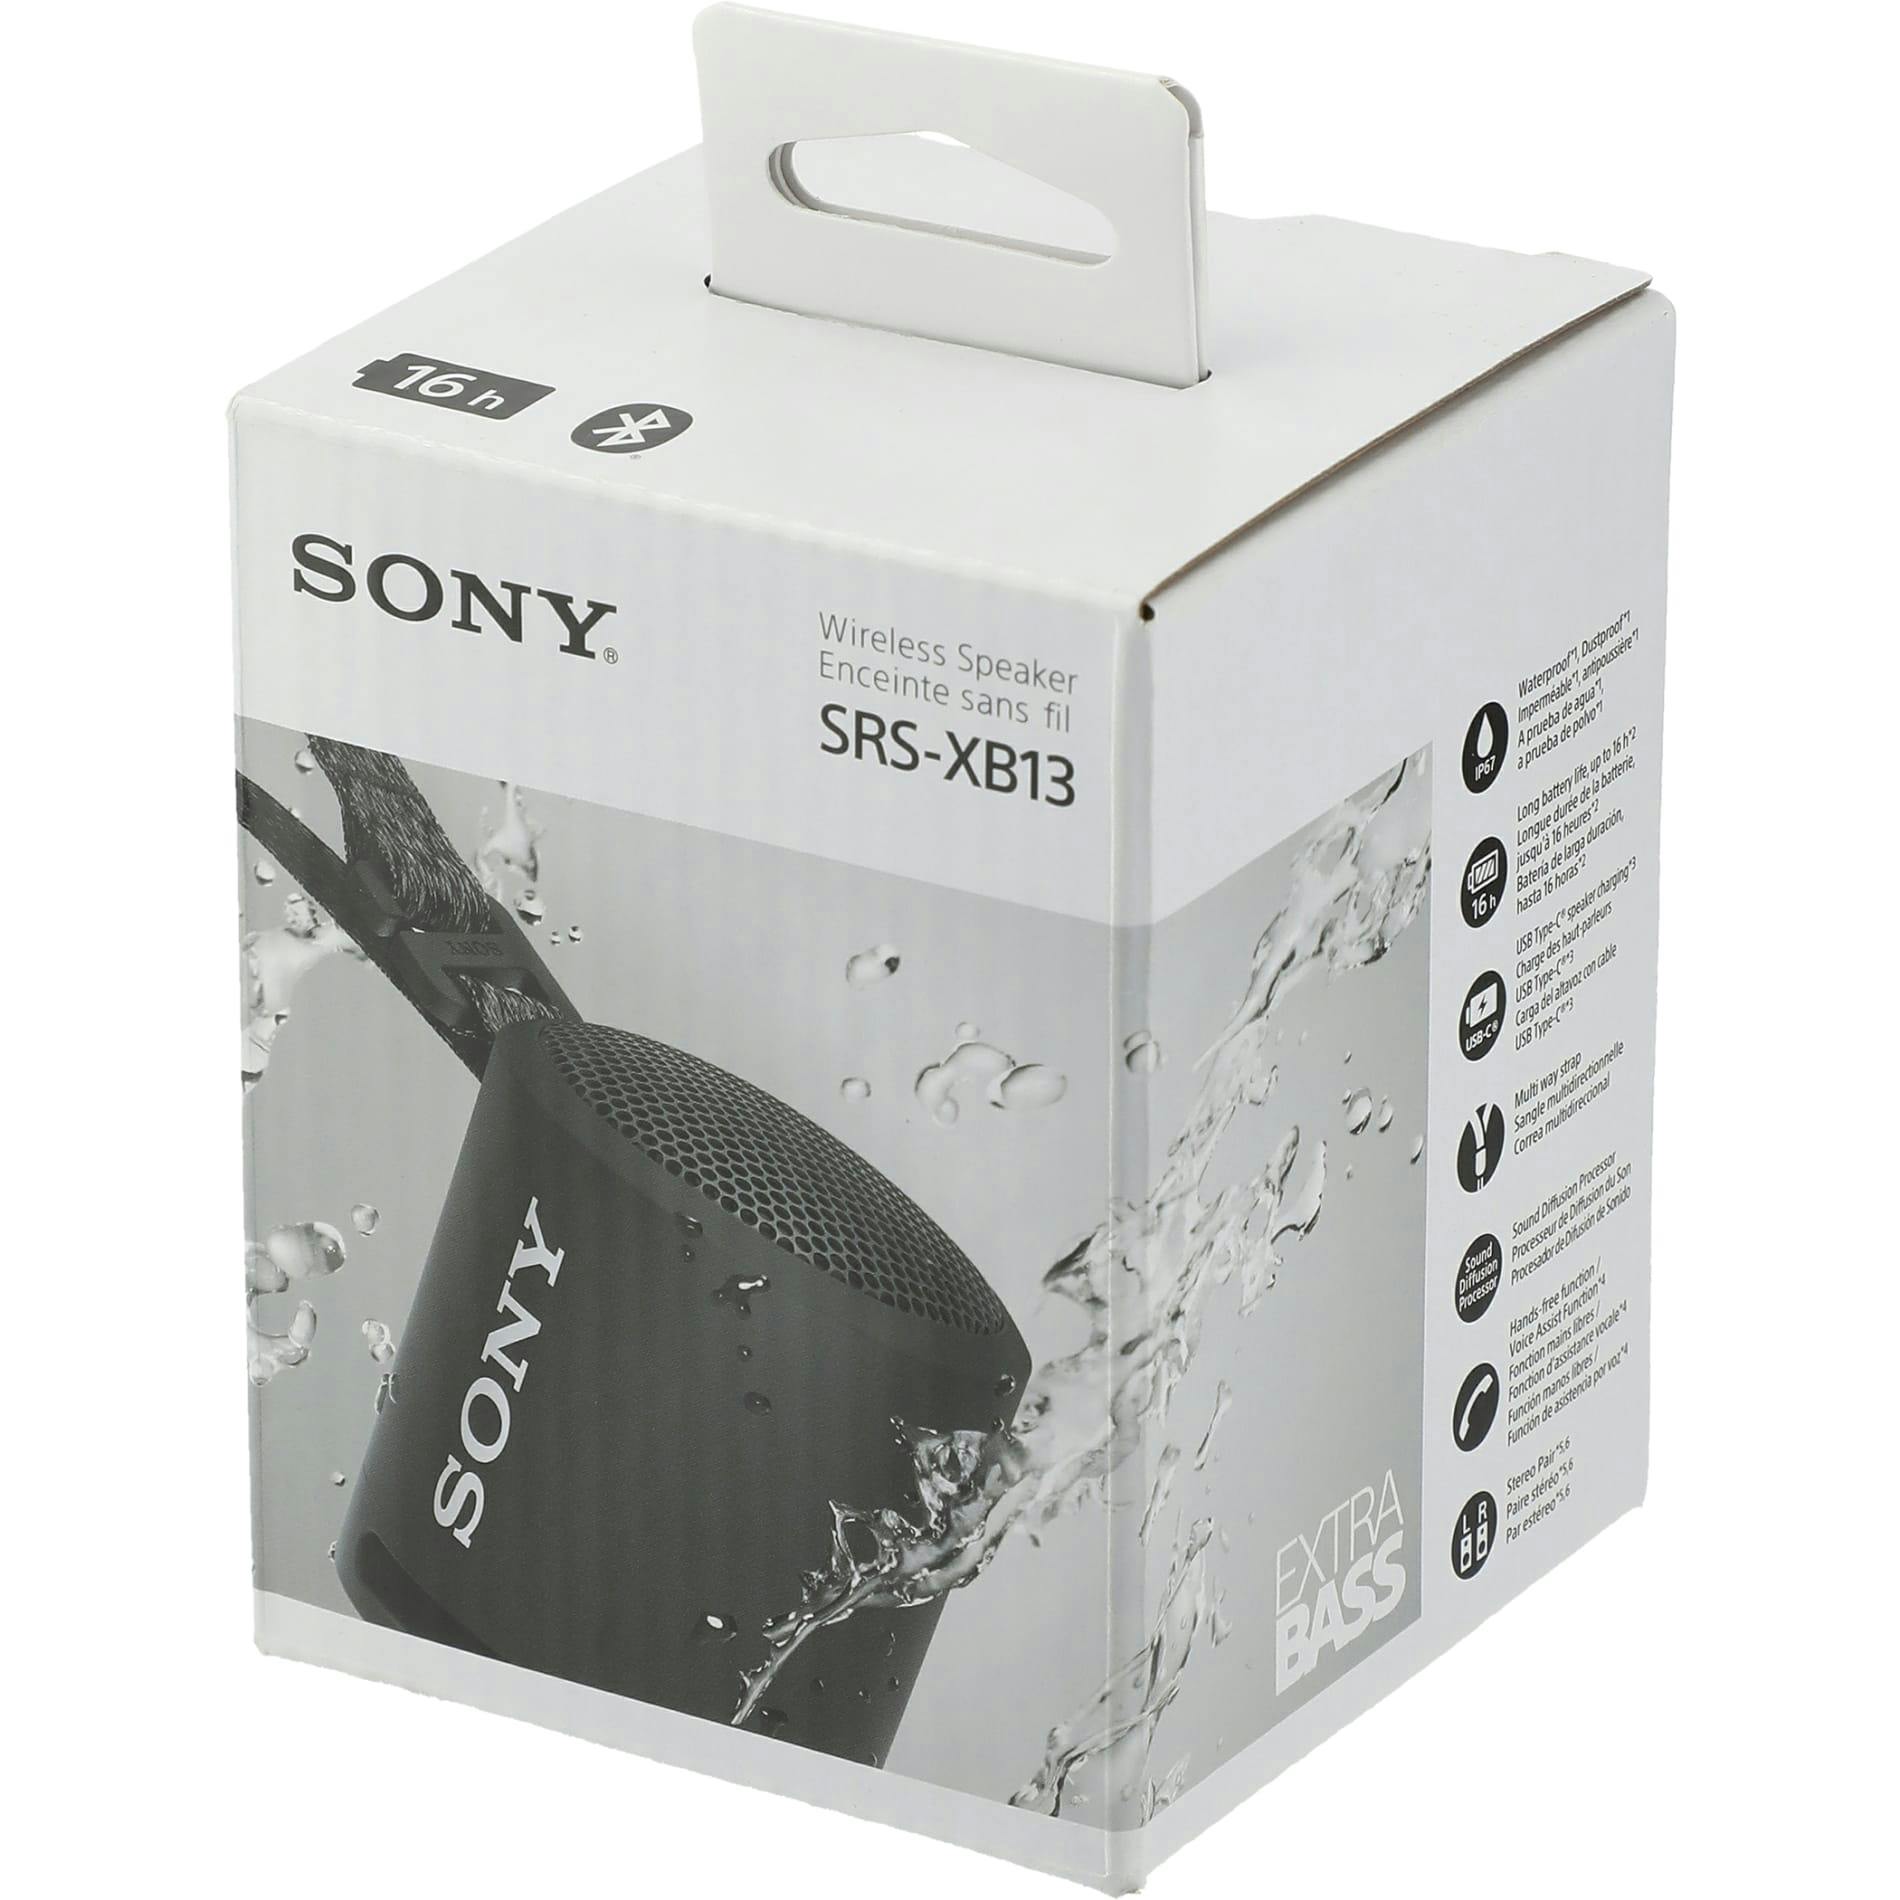 Sony SRS-XB13 Bluetooth Speaker - additional Image 5